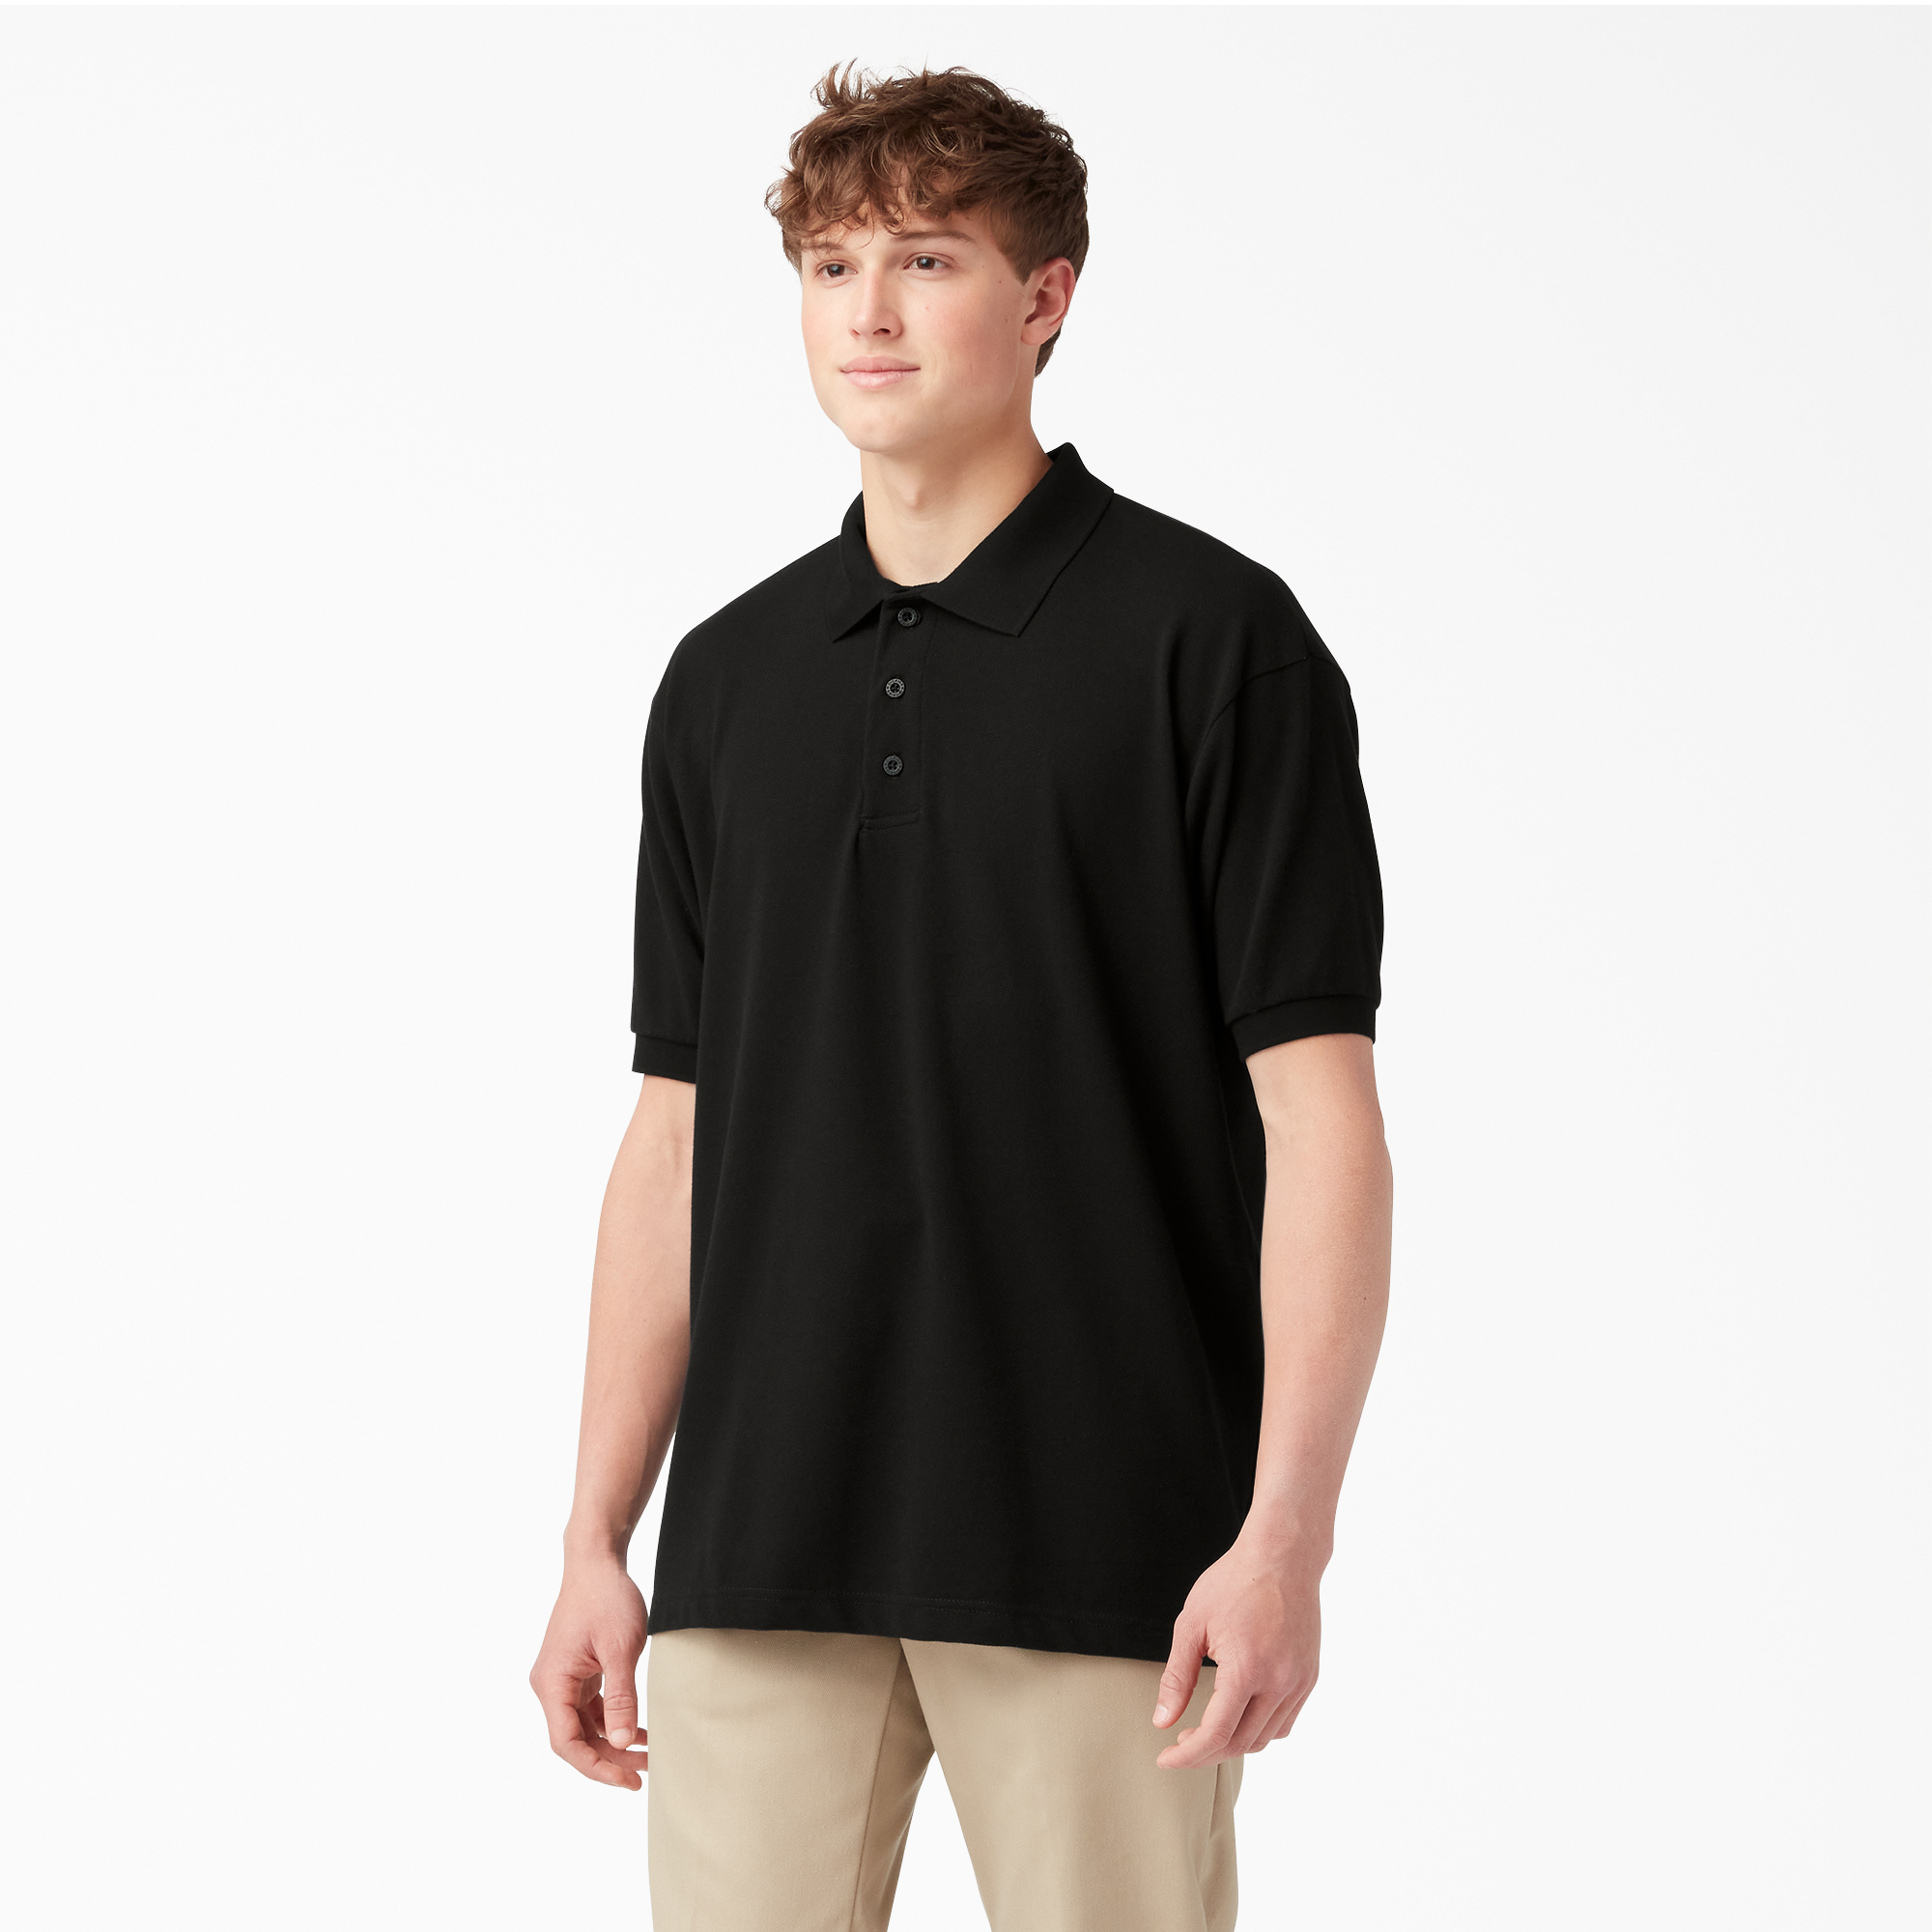 Adult Sized Short Sleeve Pique Polo Shirt - Black (BK)